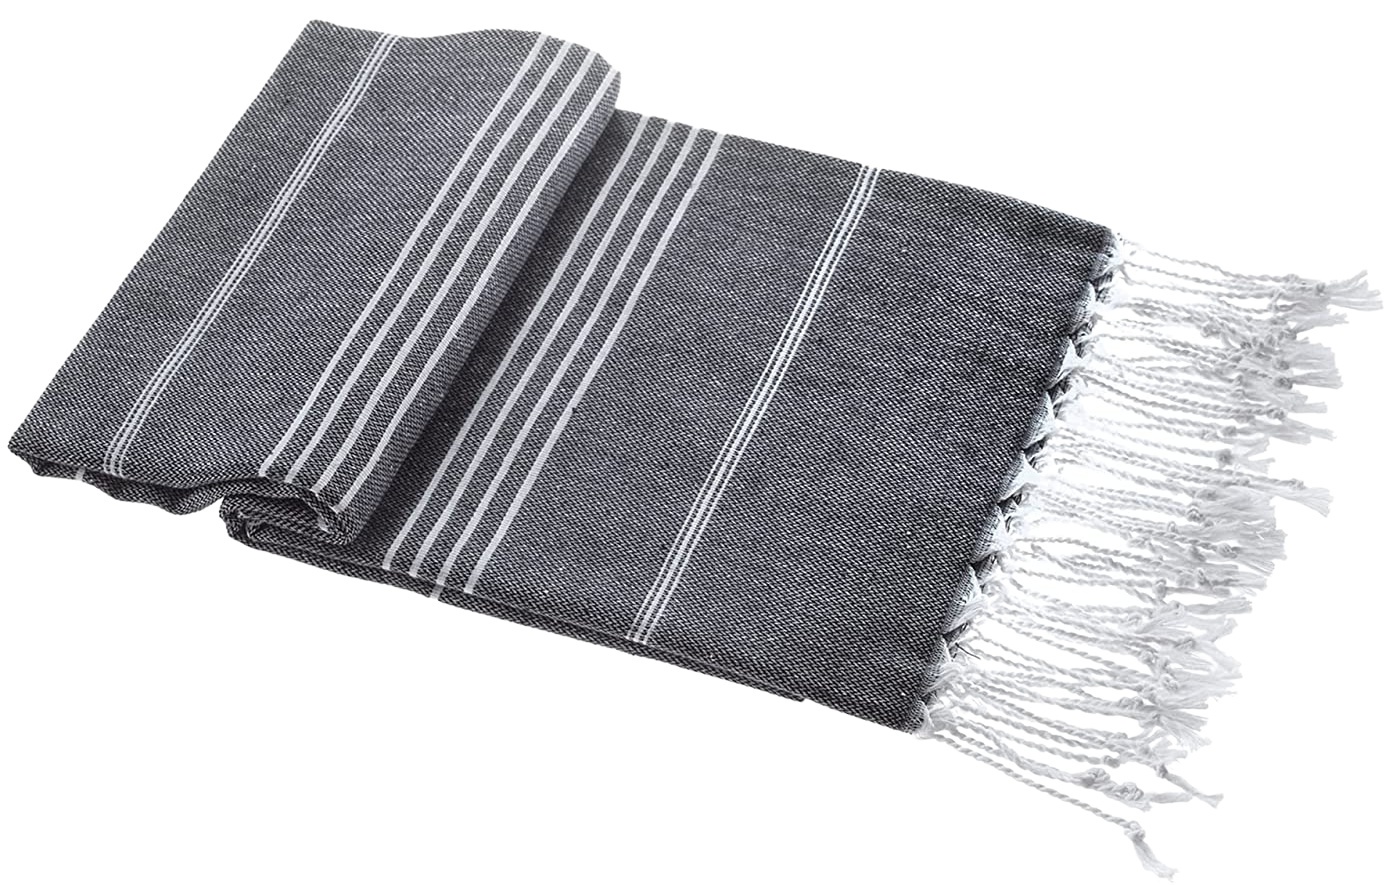 Black stripe Trukish beach towel from Hello Peshtemal.